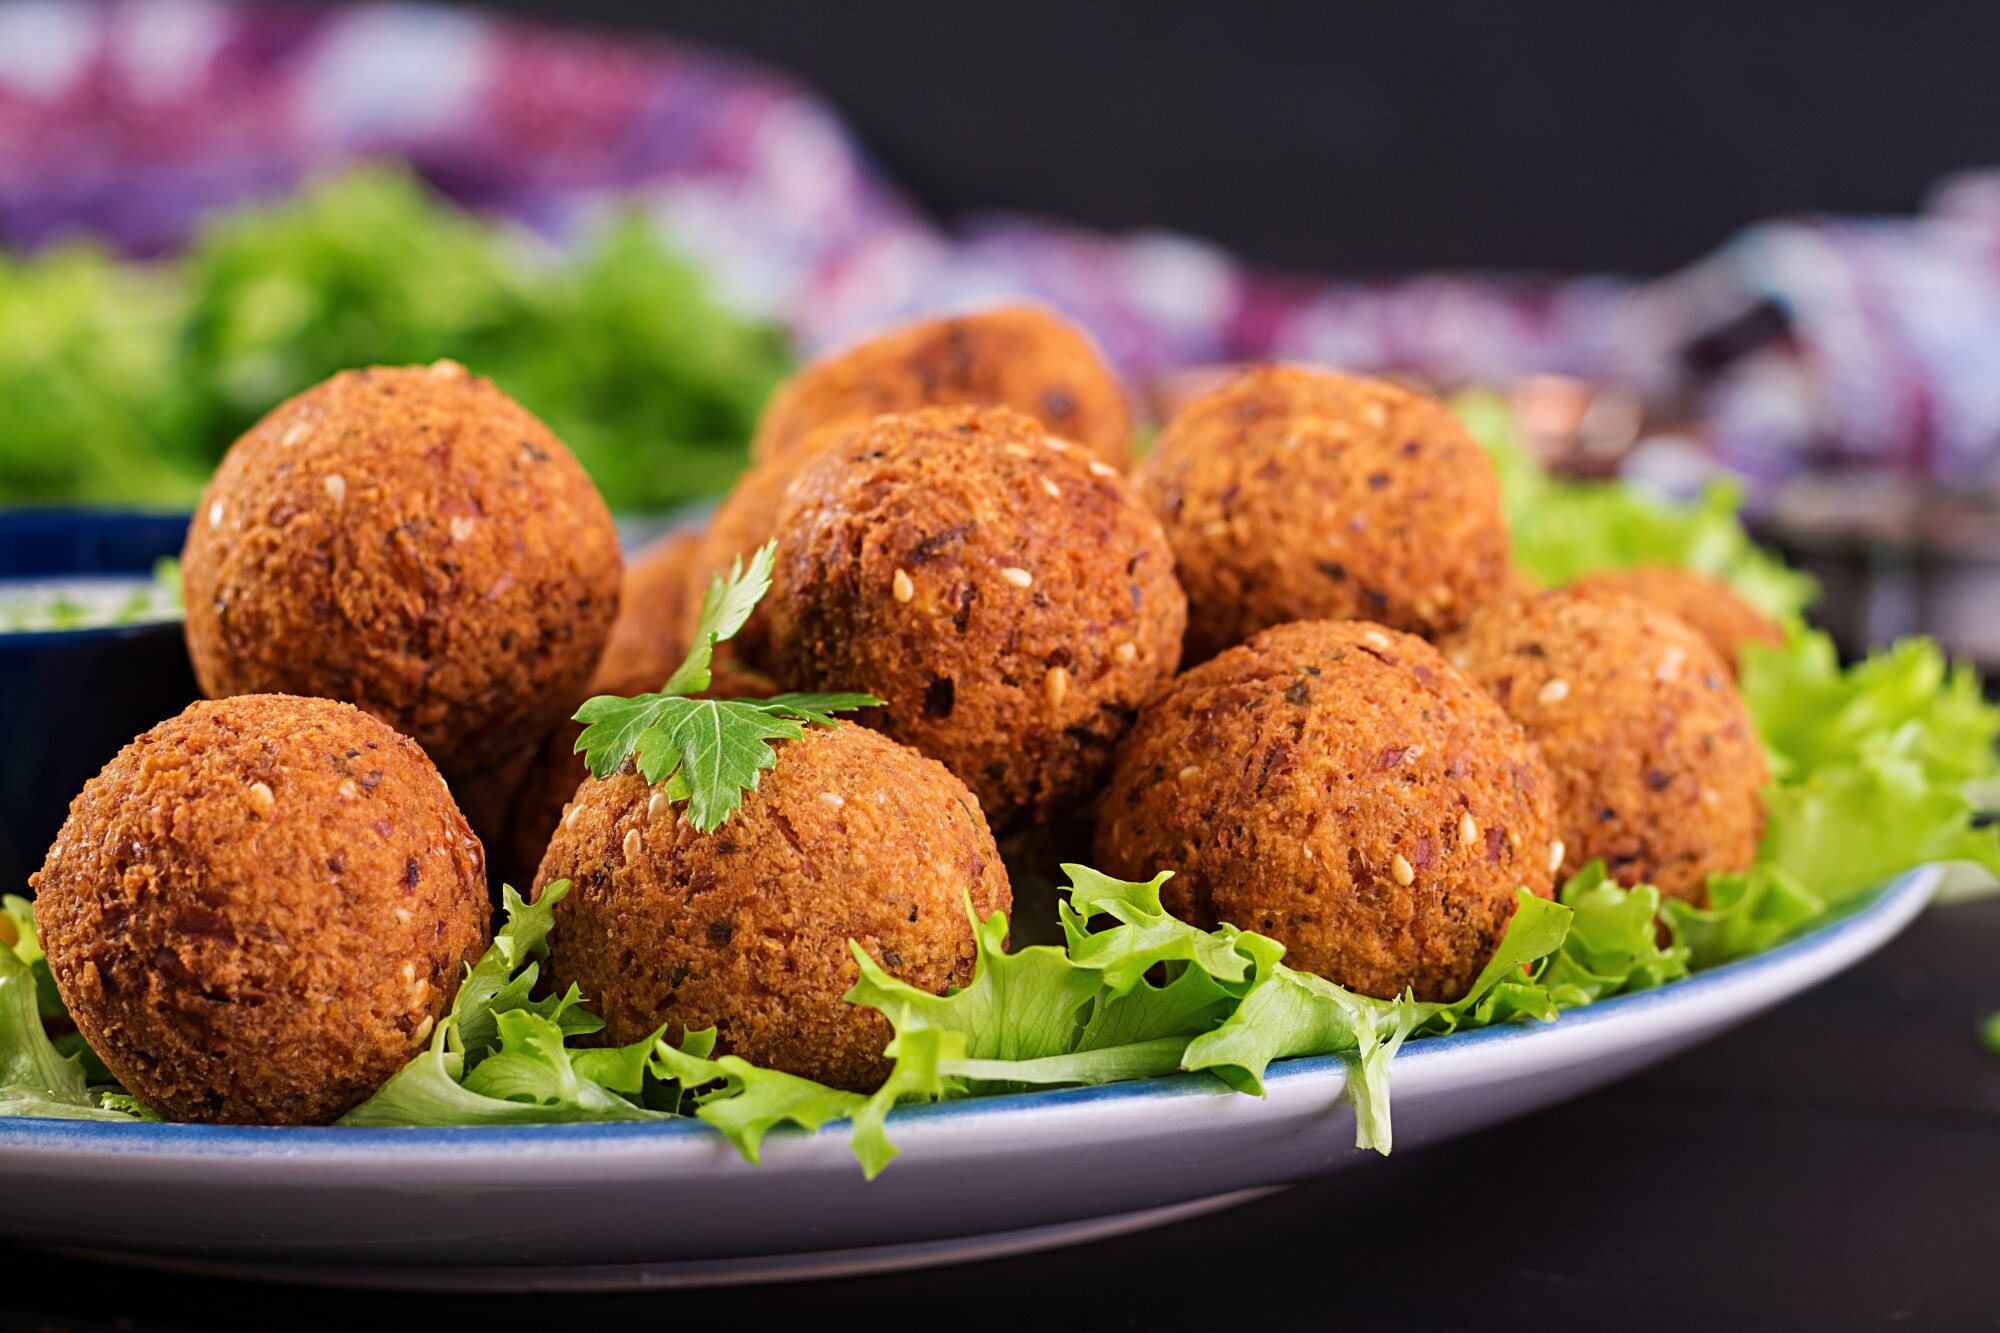 falafel-hummus-pita-middle-eastern-arabic-dishes-halal-food_2829-14339